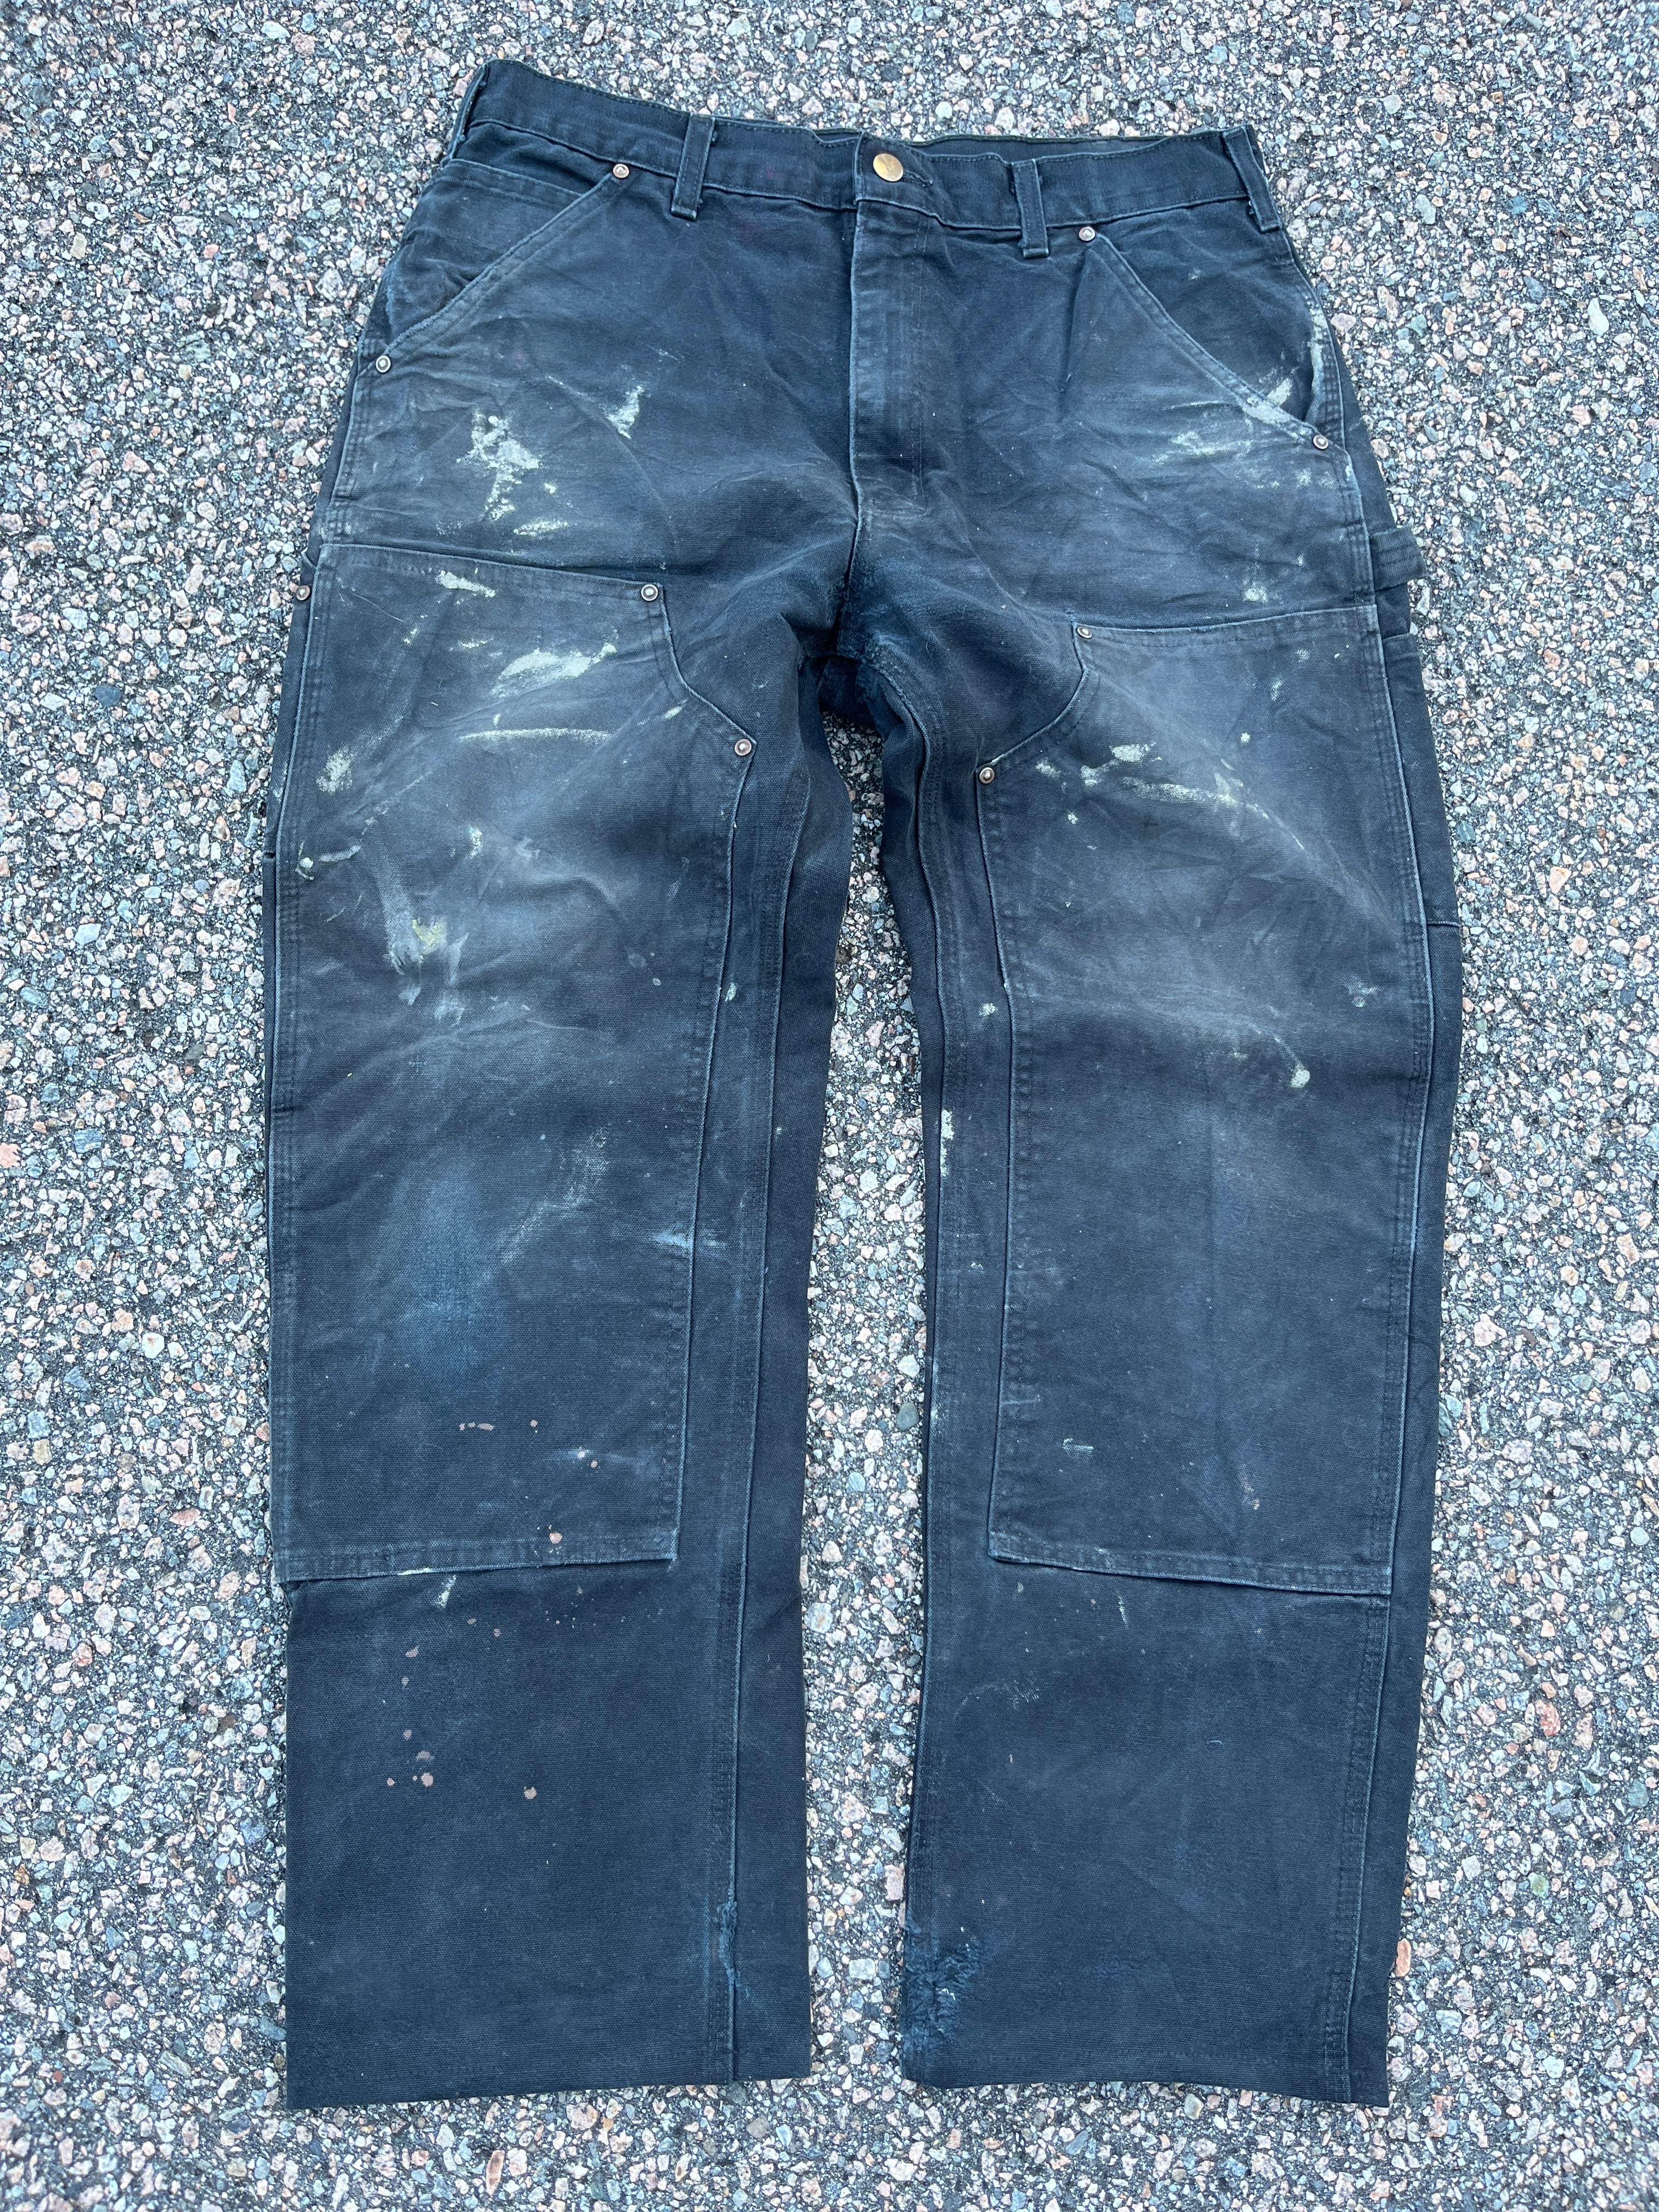 Faded n Painted Black Carhartt Double Knee Pants - 33 x 29